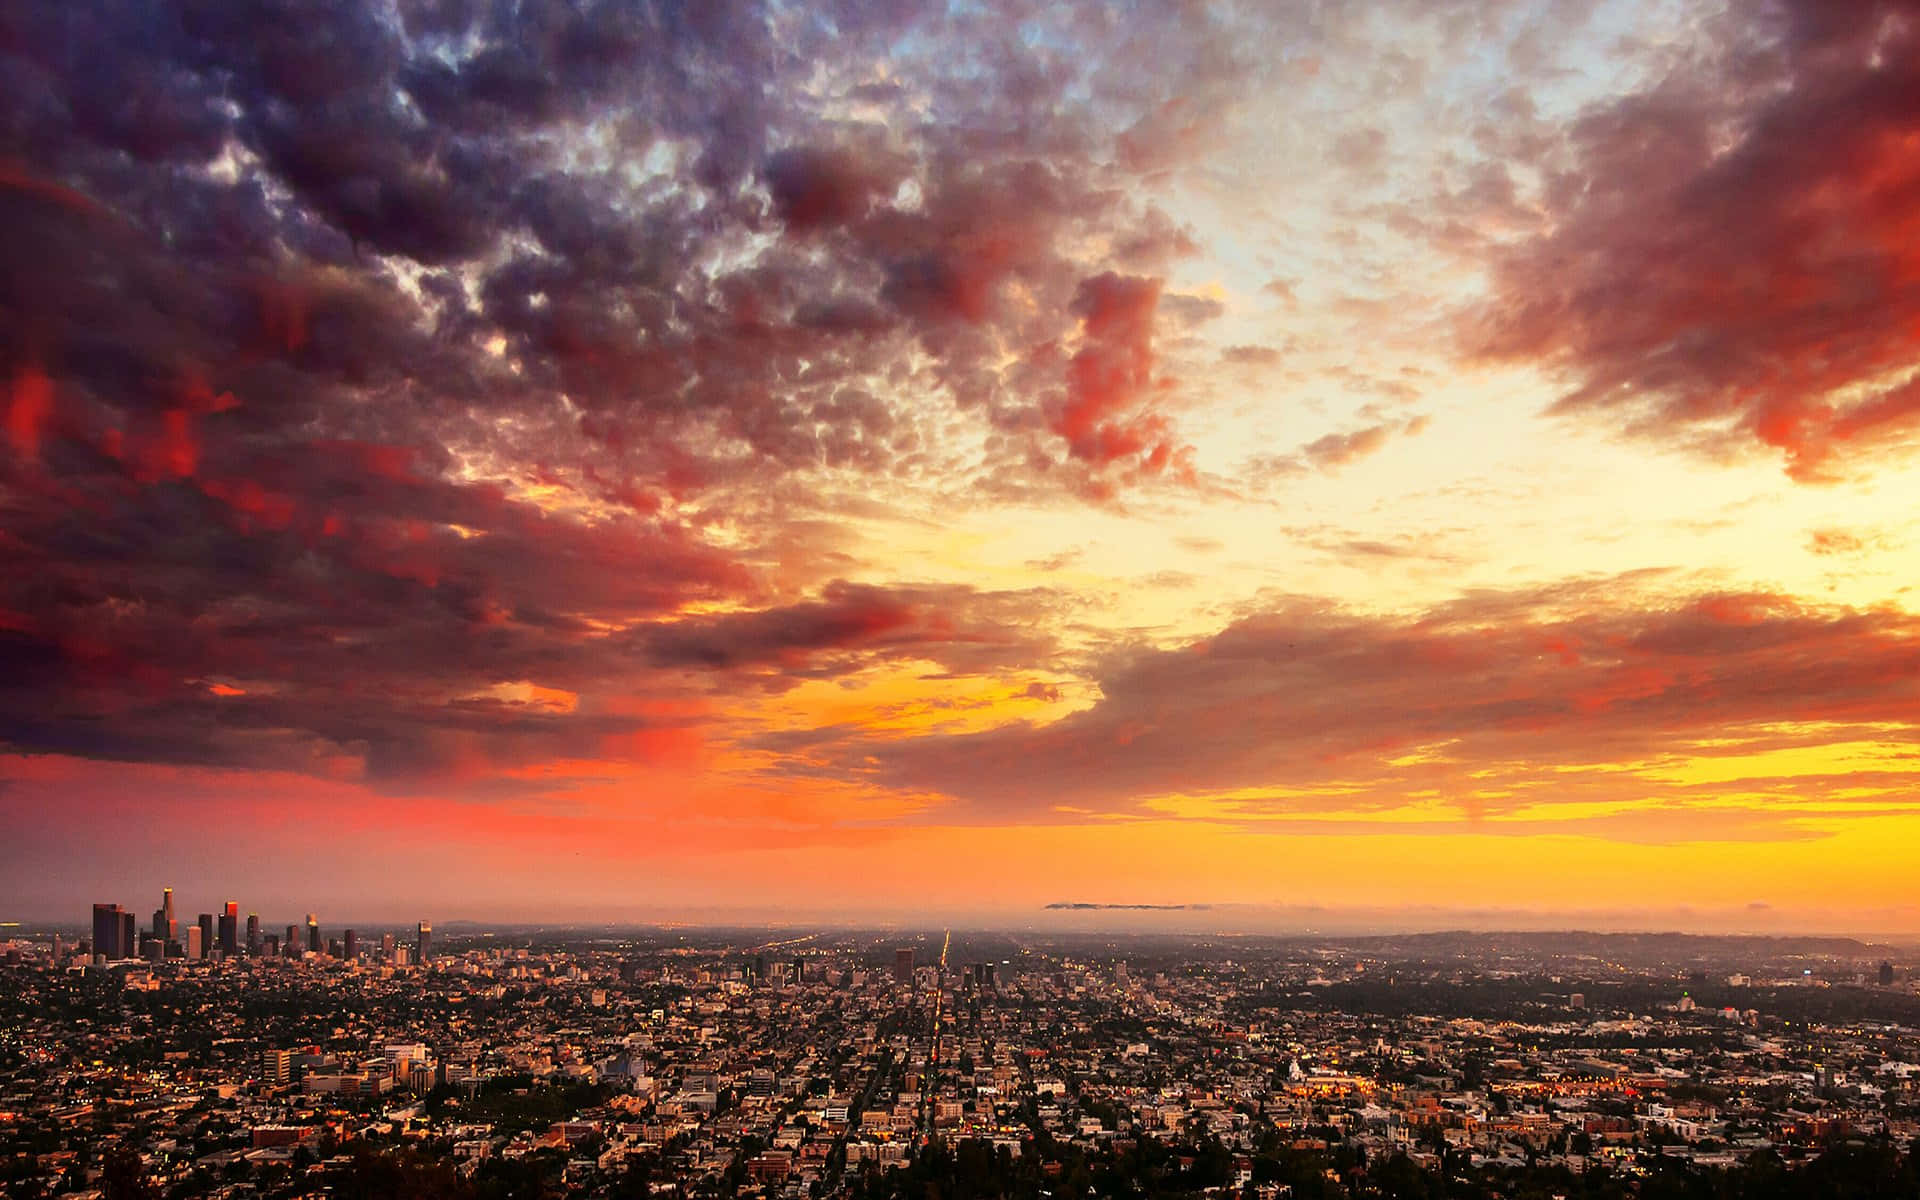 Stunning sunset over the Los Angeles skyline